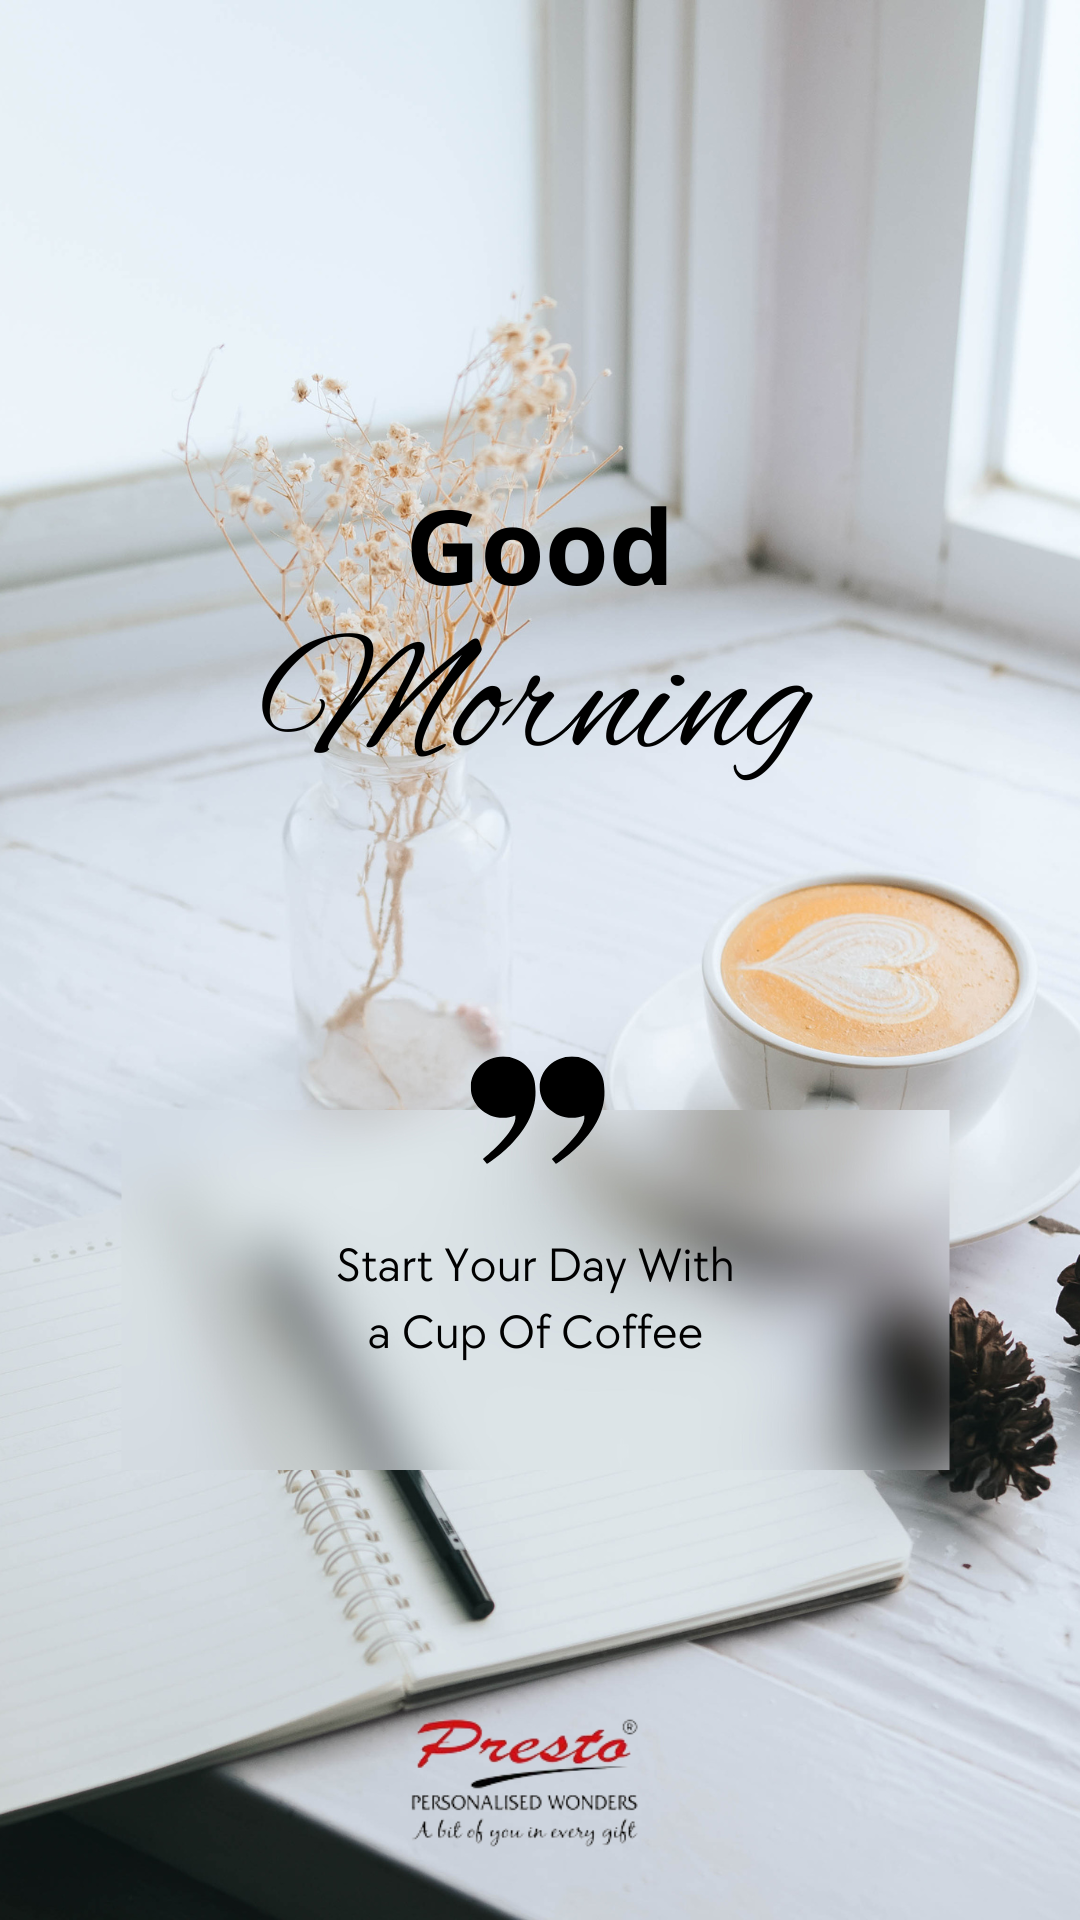 Good morning heart coffee stock photo. Image of homemade - 47783234